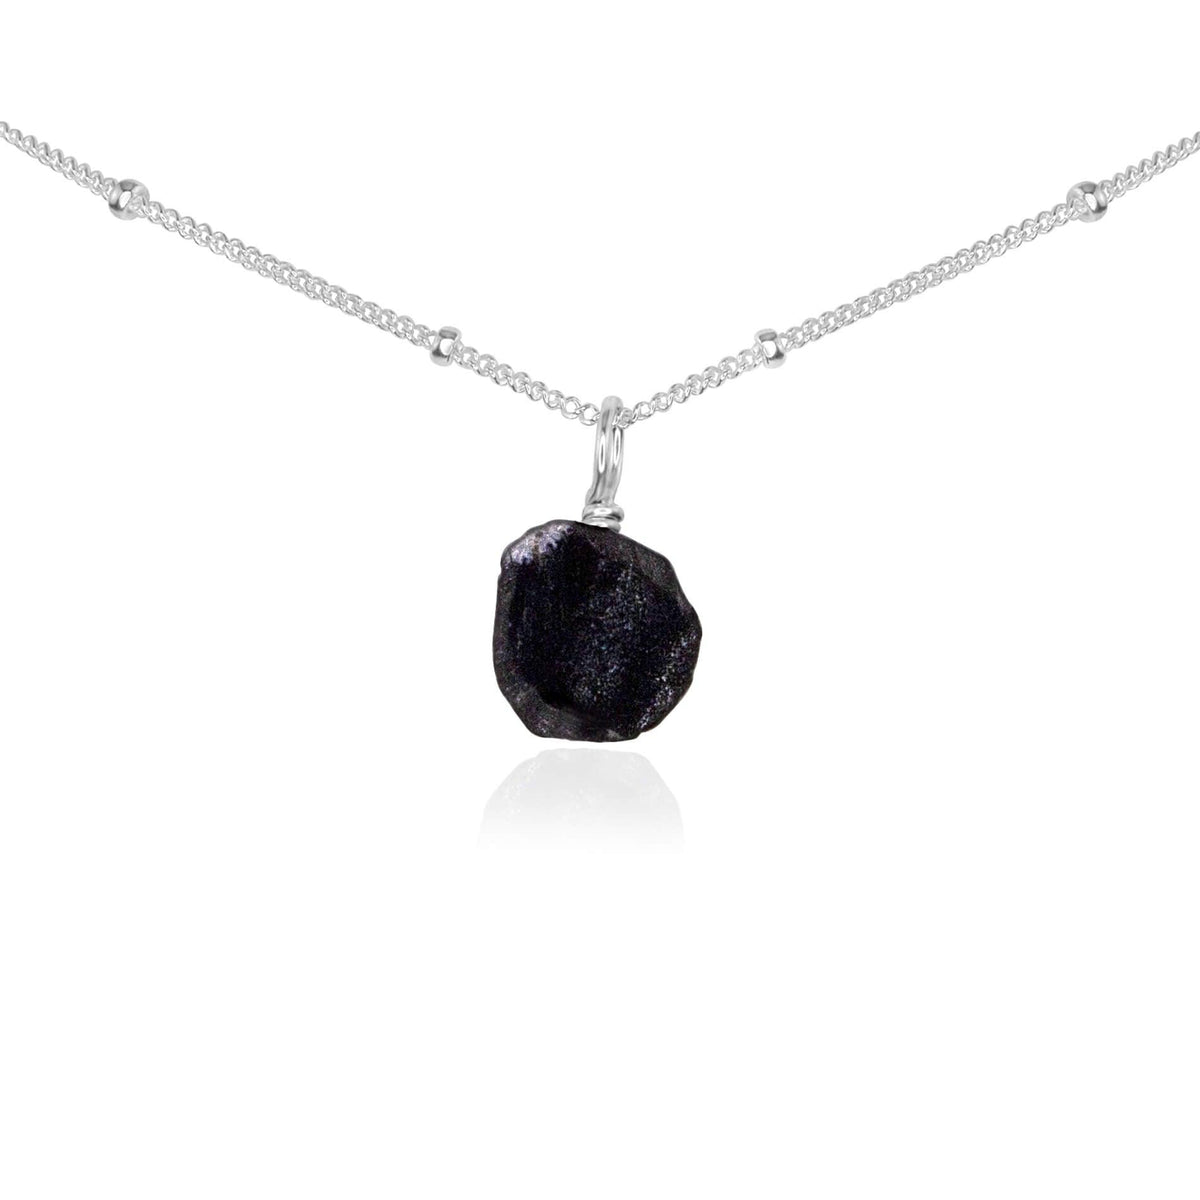 Tiny Rough Obsidian Gemstone Pendant Choker - Tiny Rough Obsidian Gemstone Pendant Choker - Sterling Silver / Satellite - Luna Tide Handmade Crystal Jewellery